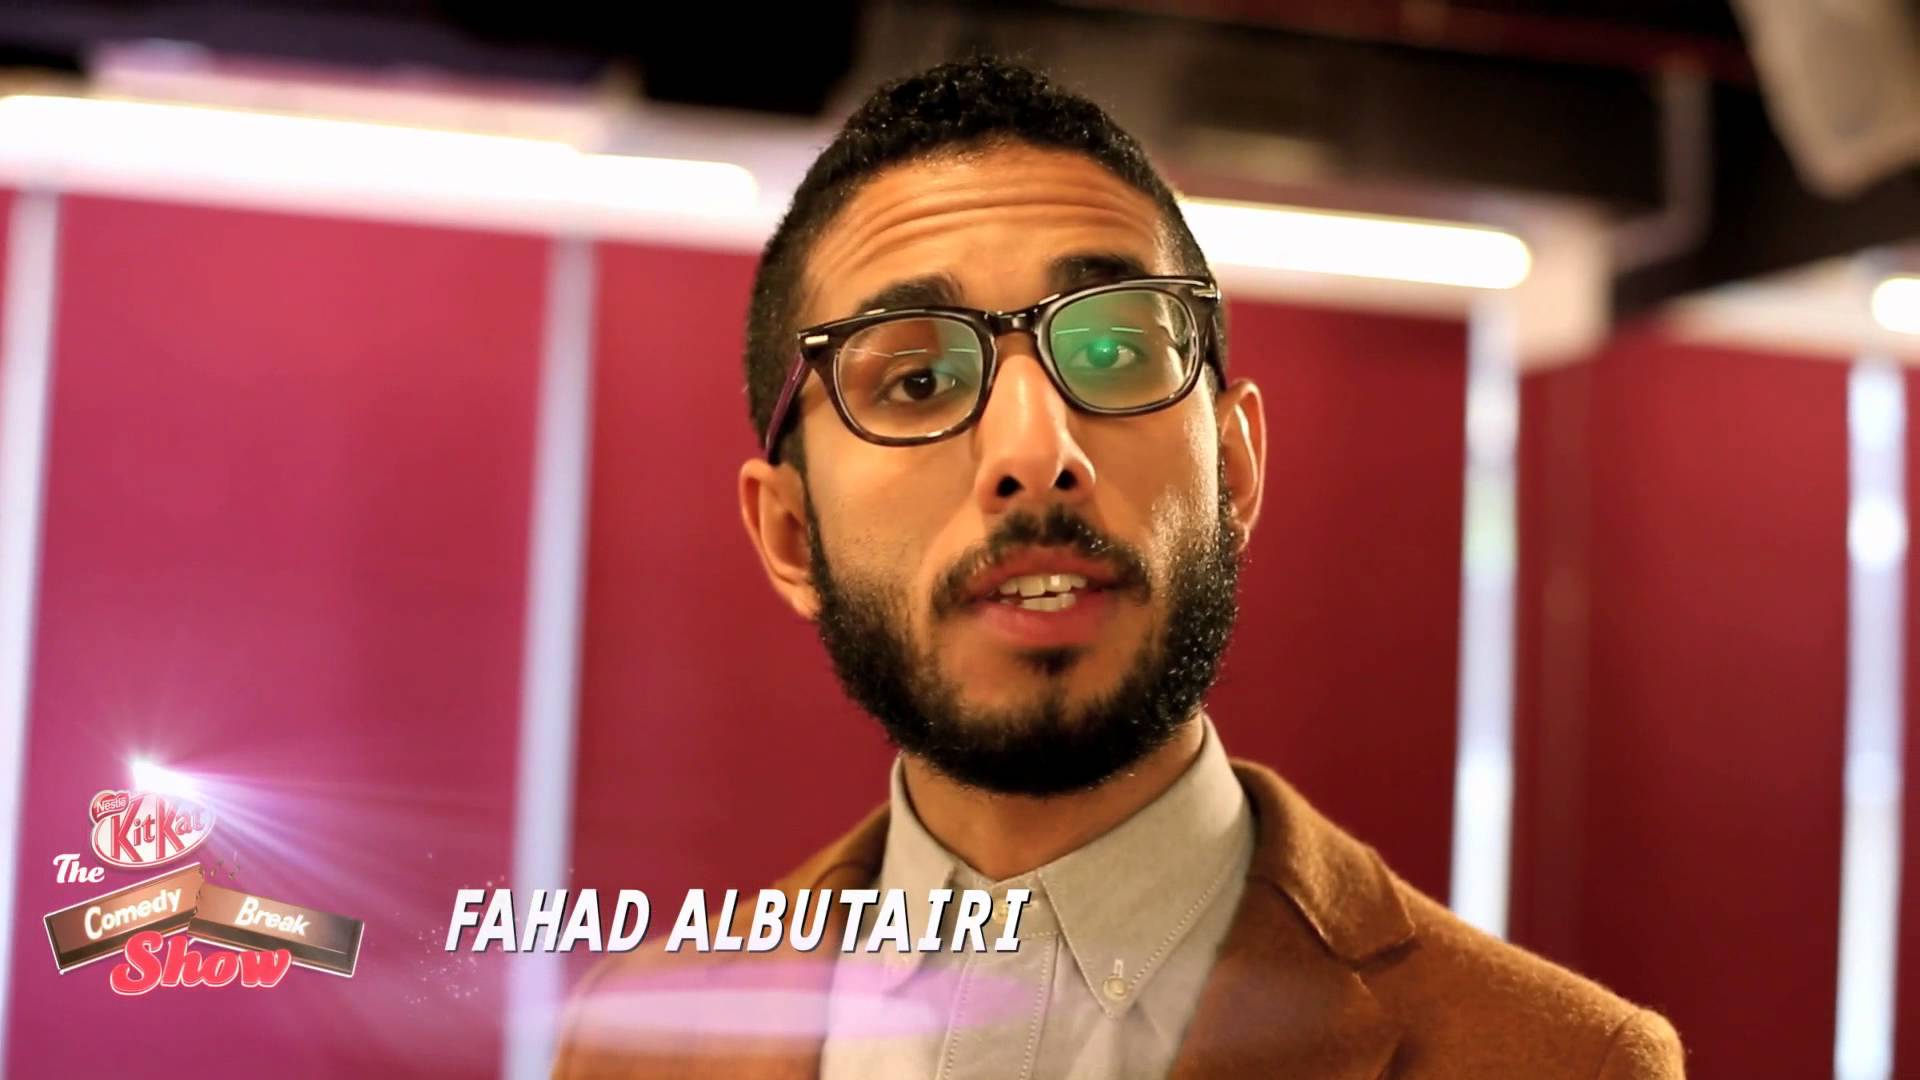 Fahad Albutairi